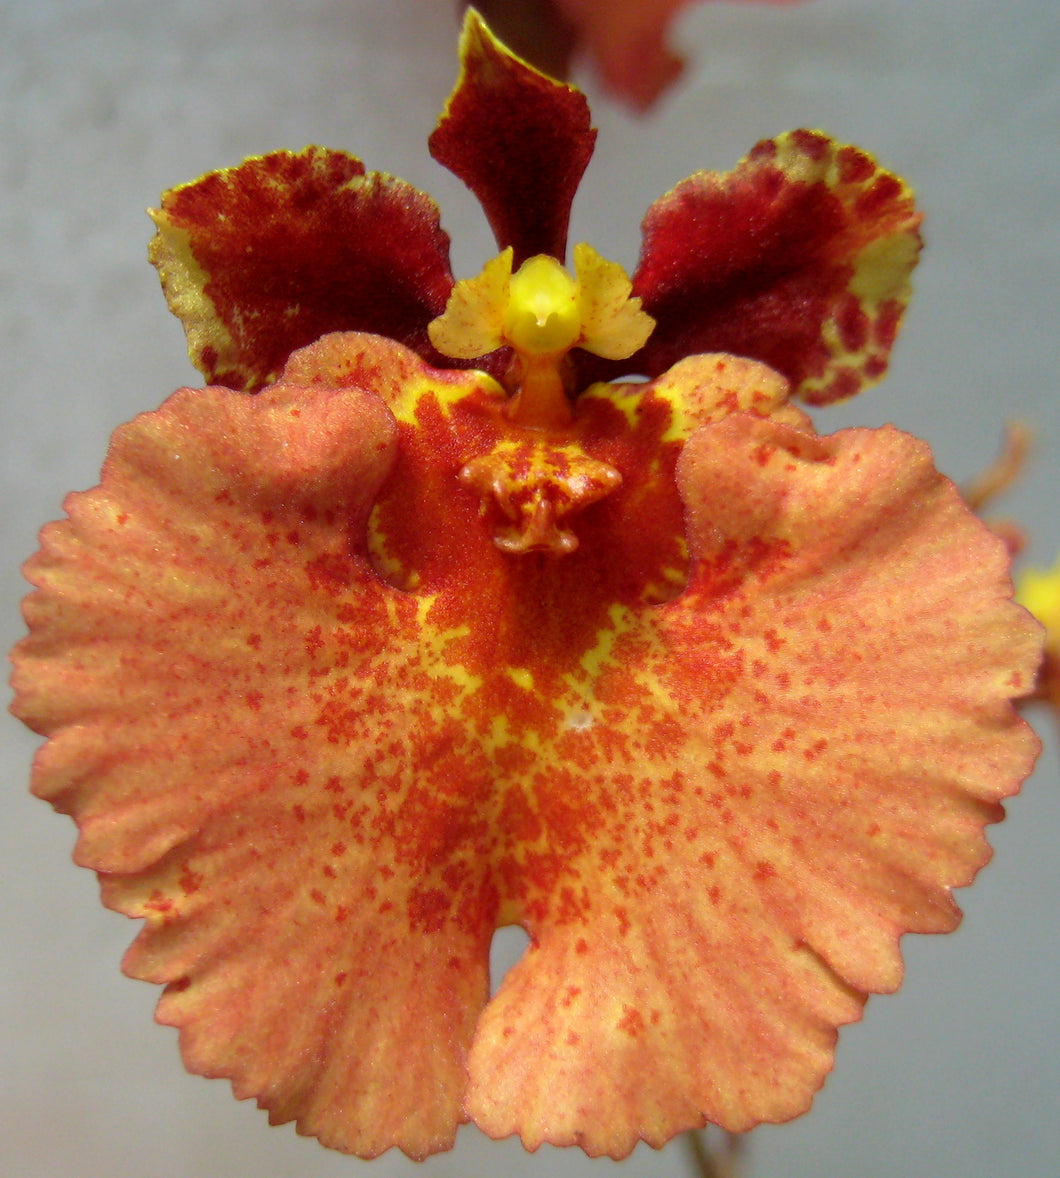 Orchid Seedling 50mm Pot size - Oncidium Tolumnia Capalaba Prime Sunrise x Capalaba Queen 'Yum Yum'